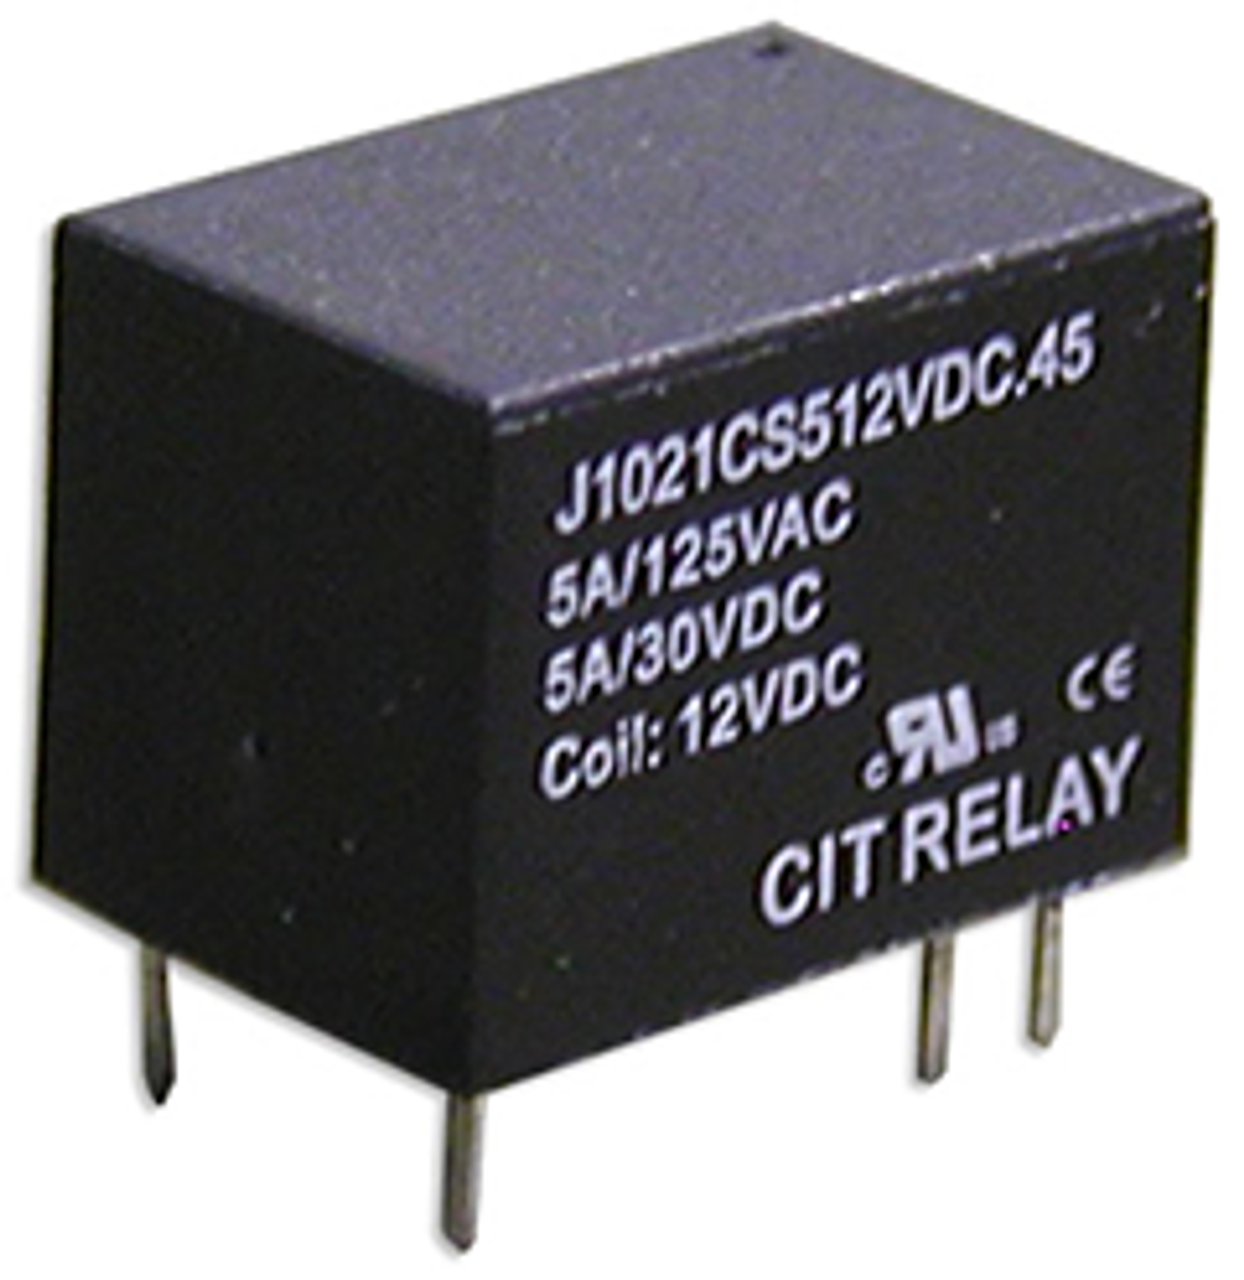 CIT Relay and Switch J1021CS3P24VDC.20 Power Relays